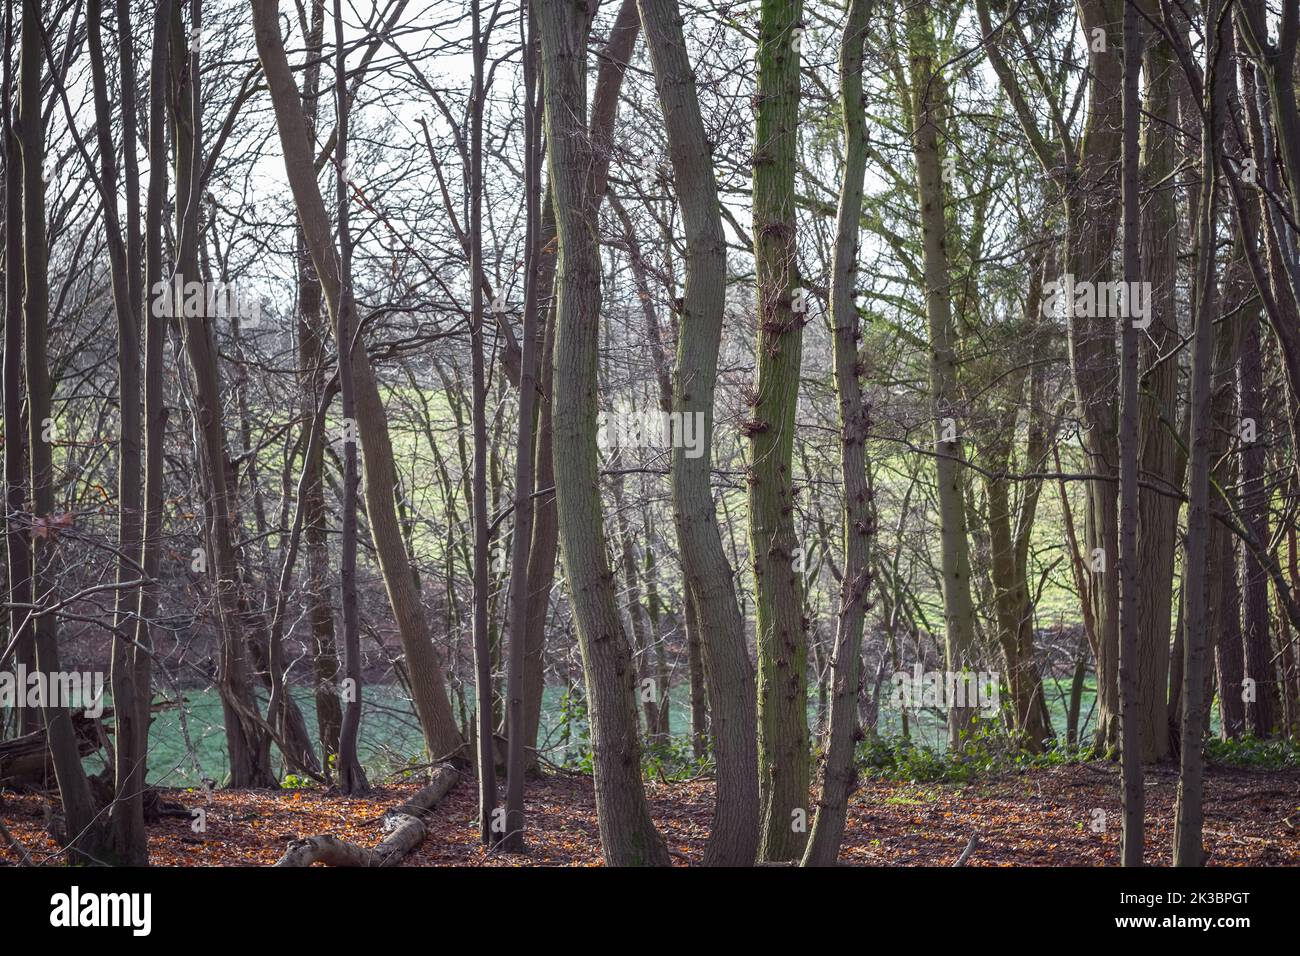 Bare trees background. Sherrardspark Wood in Welwyn Garden City, Hertfordshire, England Stock Photo